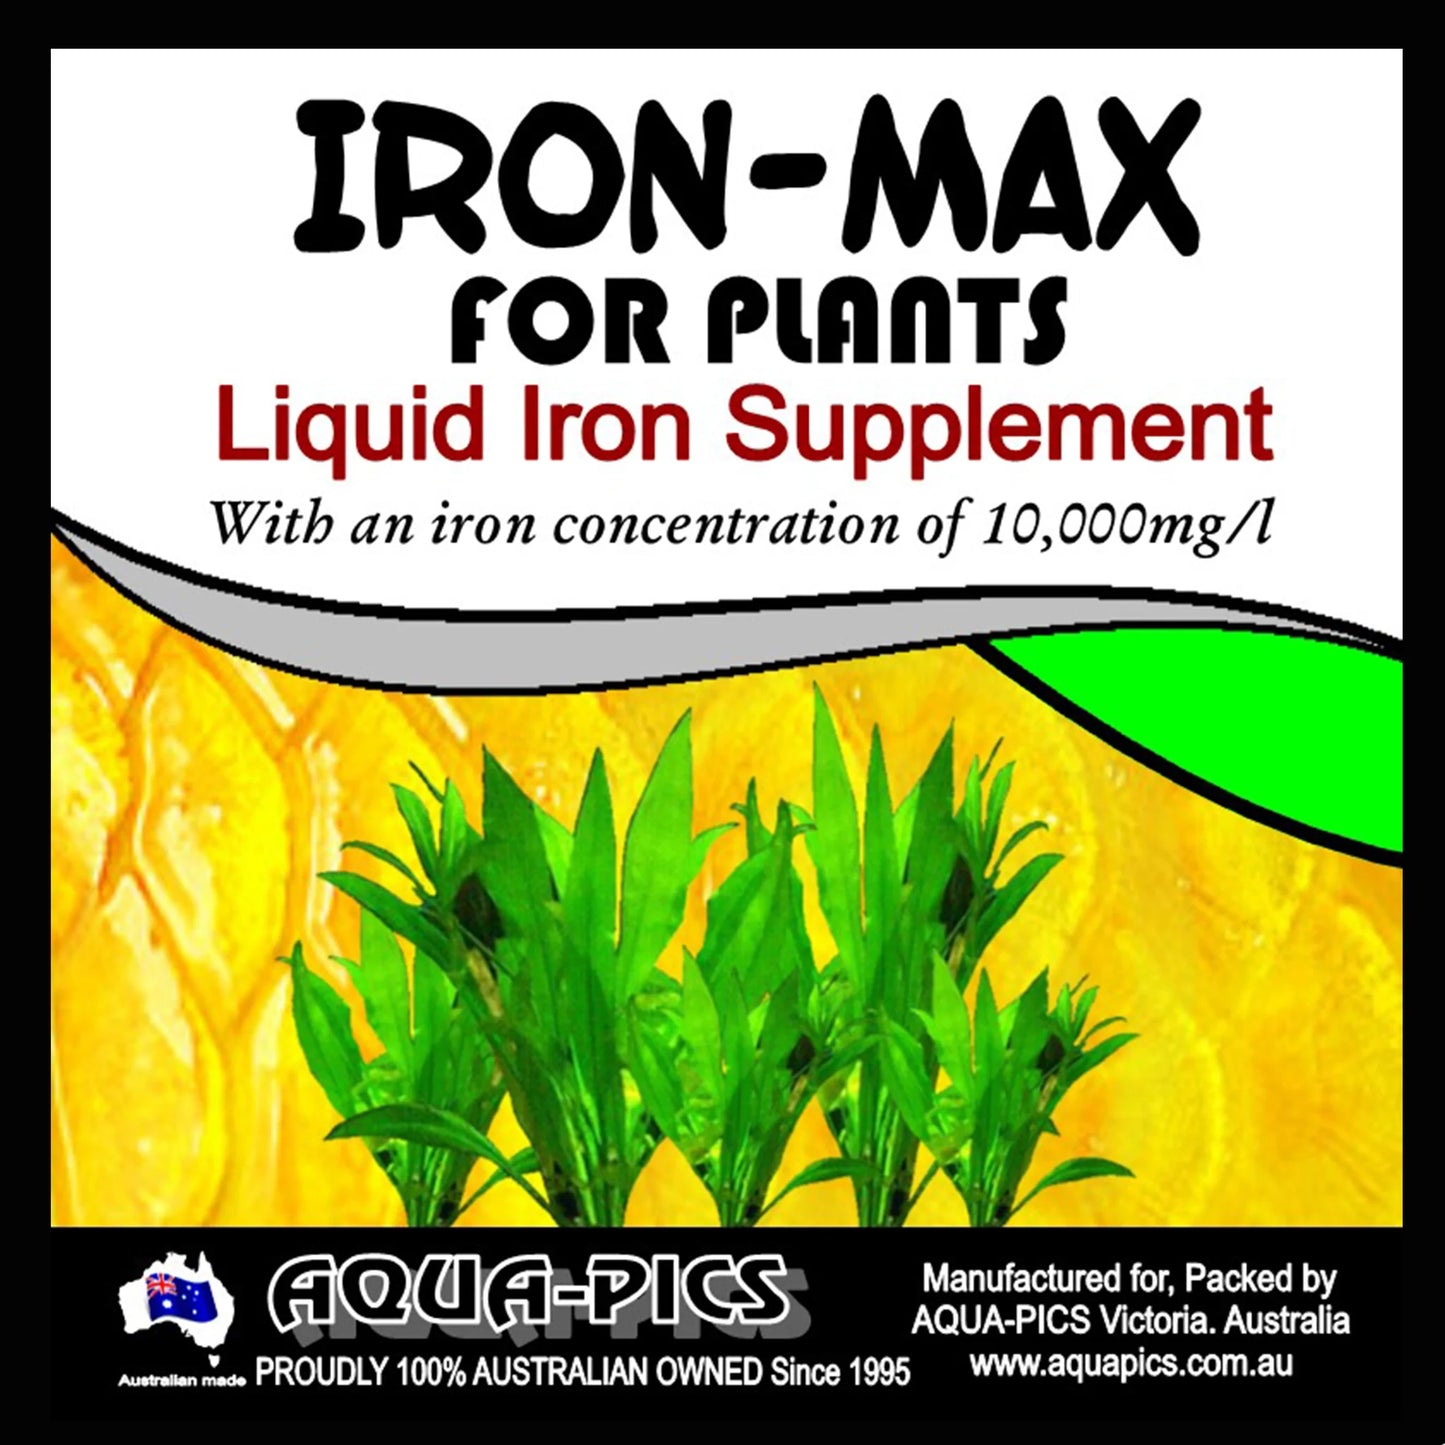 Iron-Max Professional grade liquid iron supplement 2 litre